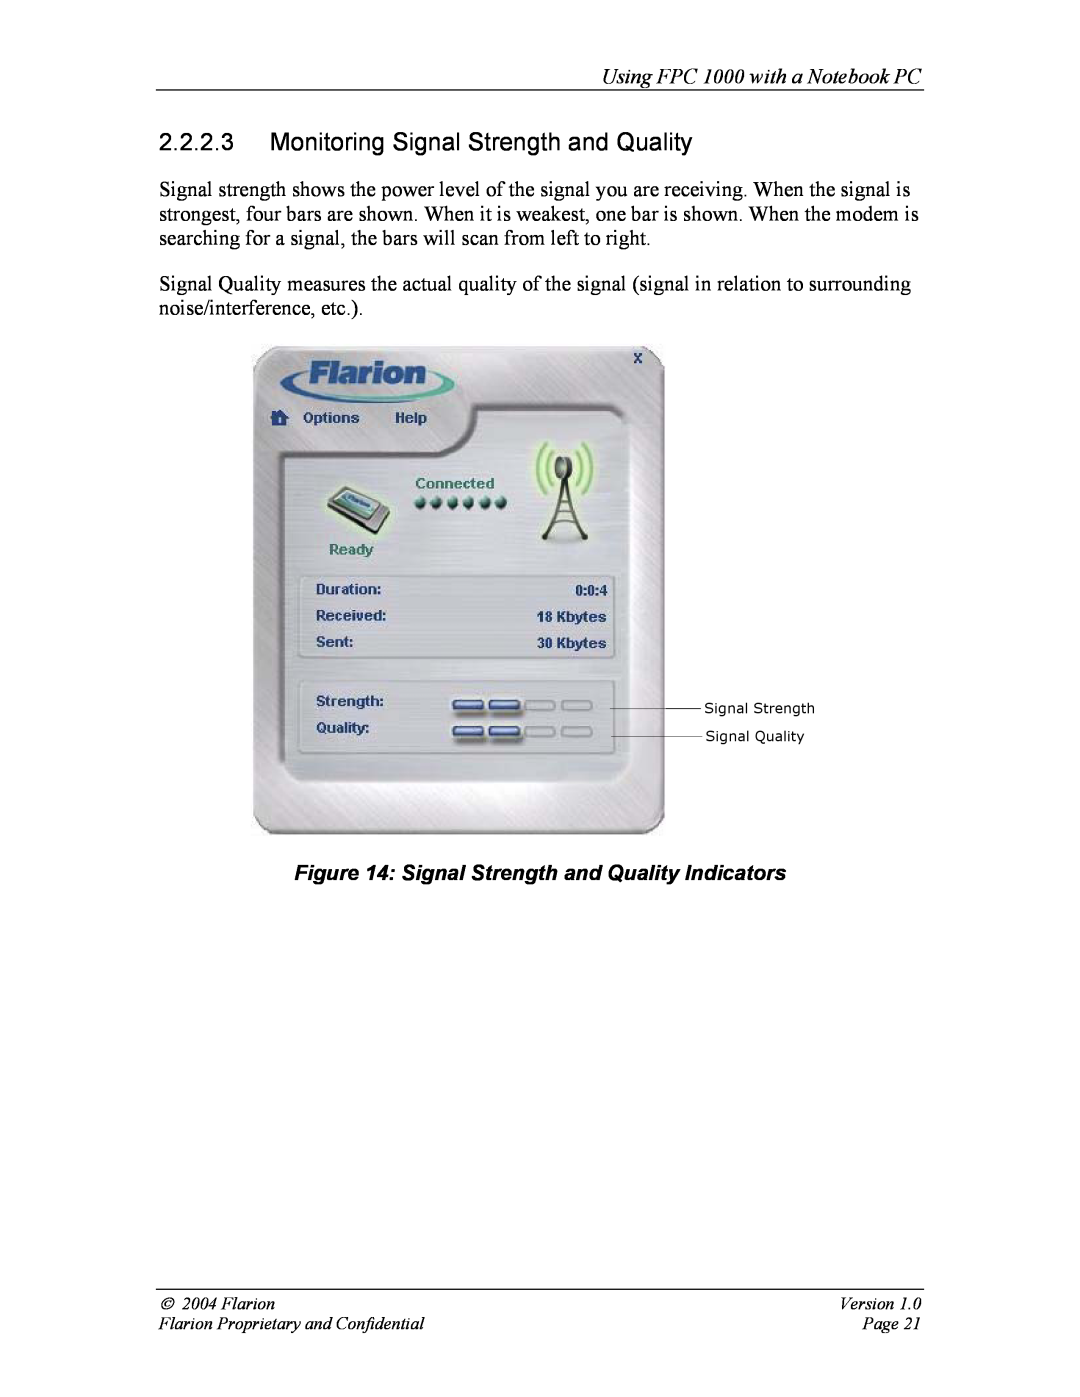 GE FPC 1000 manual Monitoring Signal Strength and Quality, Signal Strength and Quality Indicators 